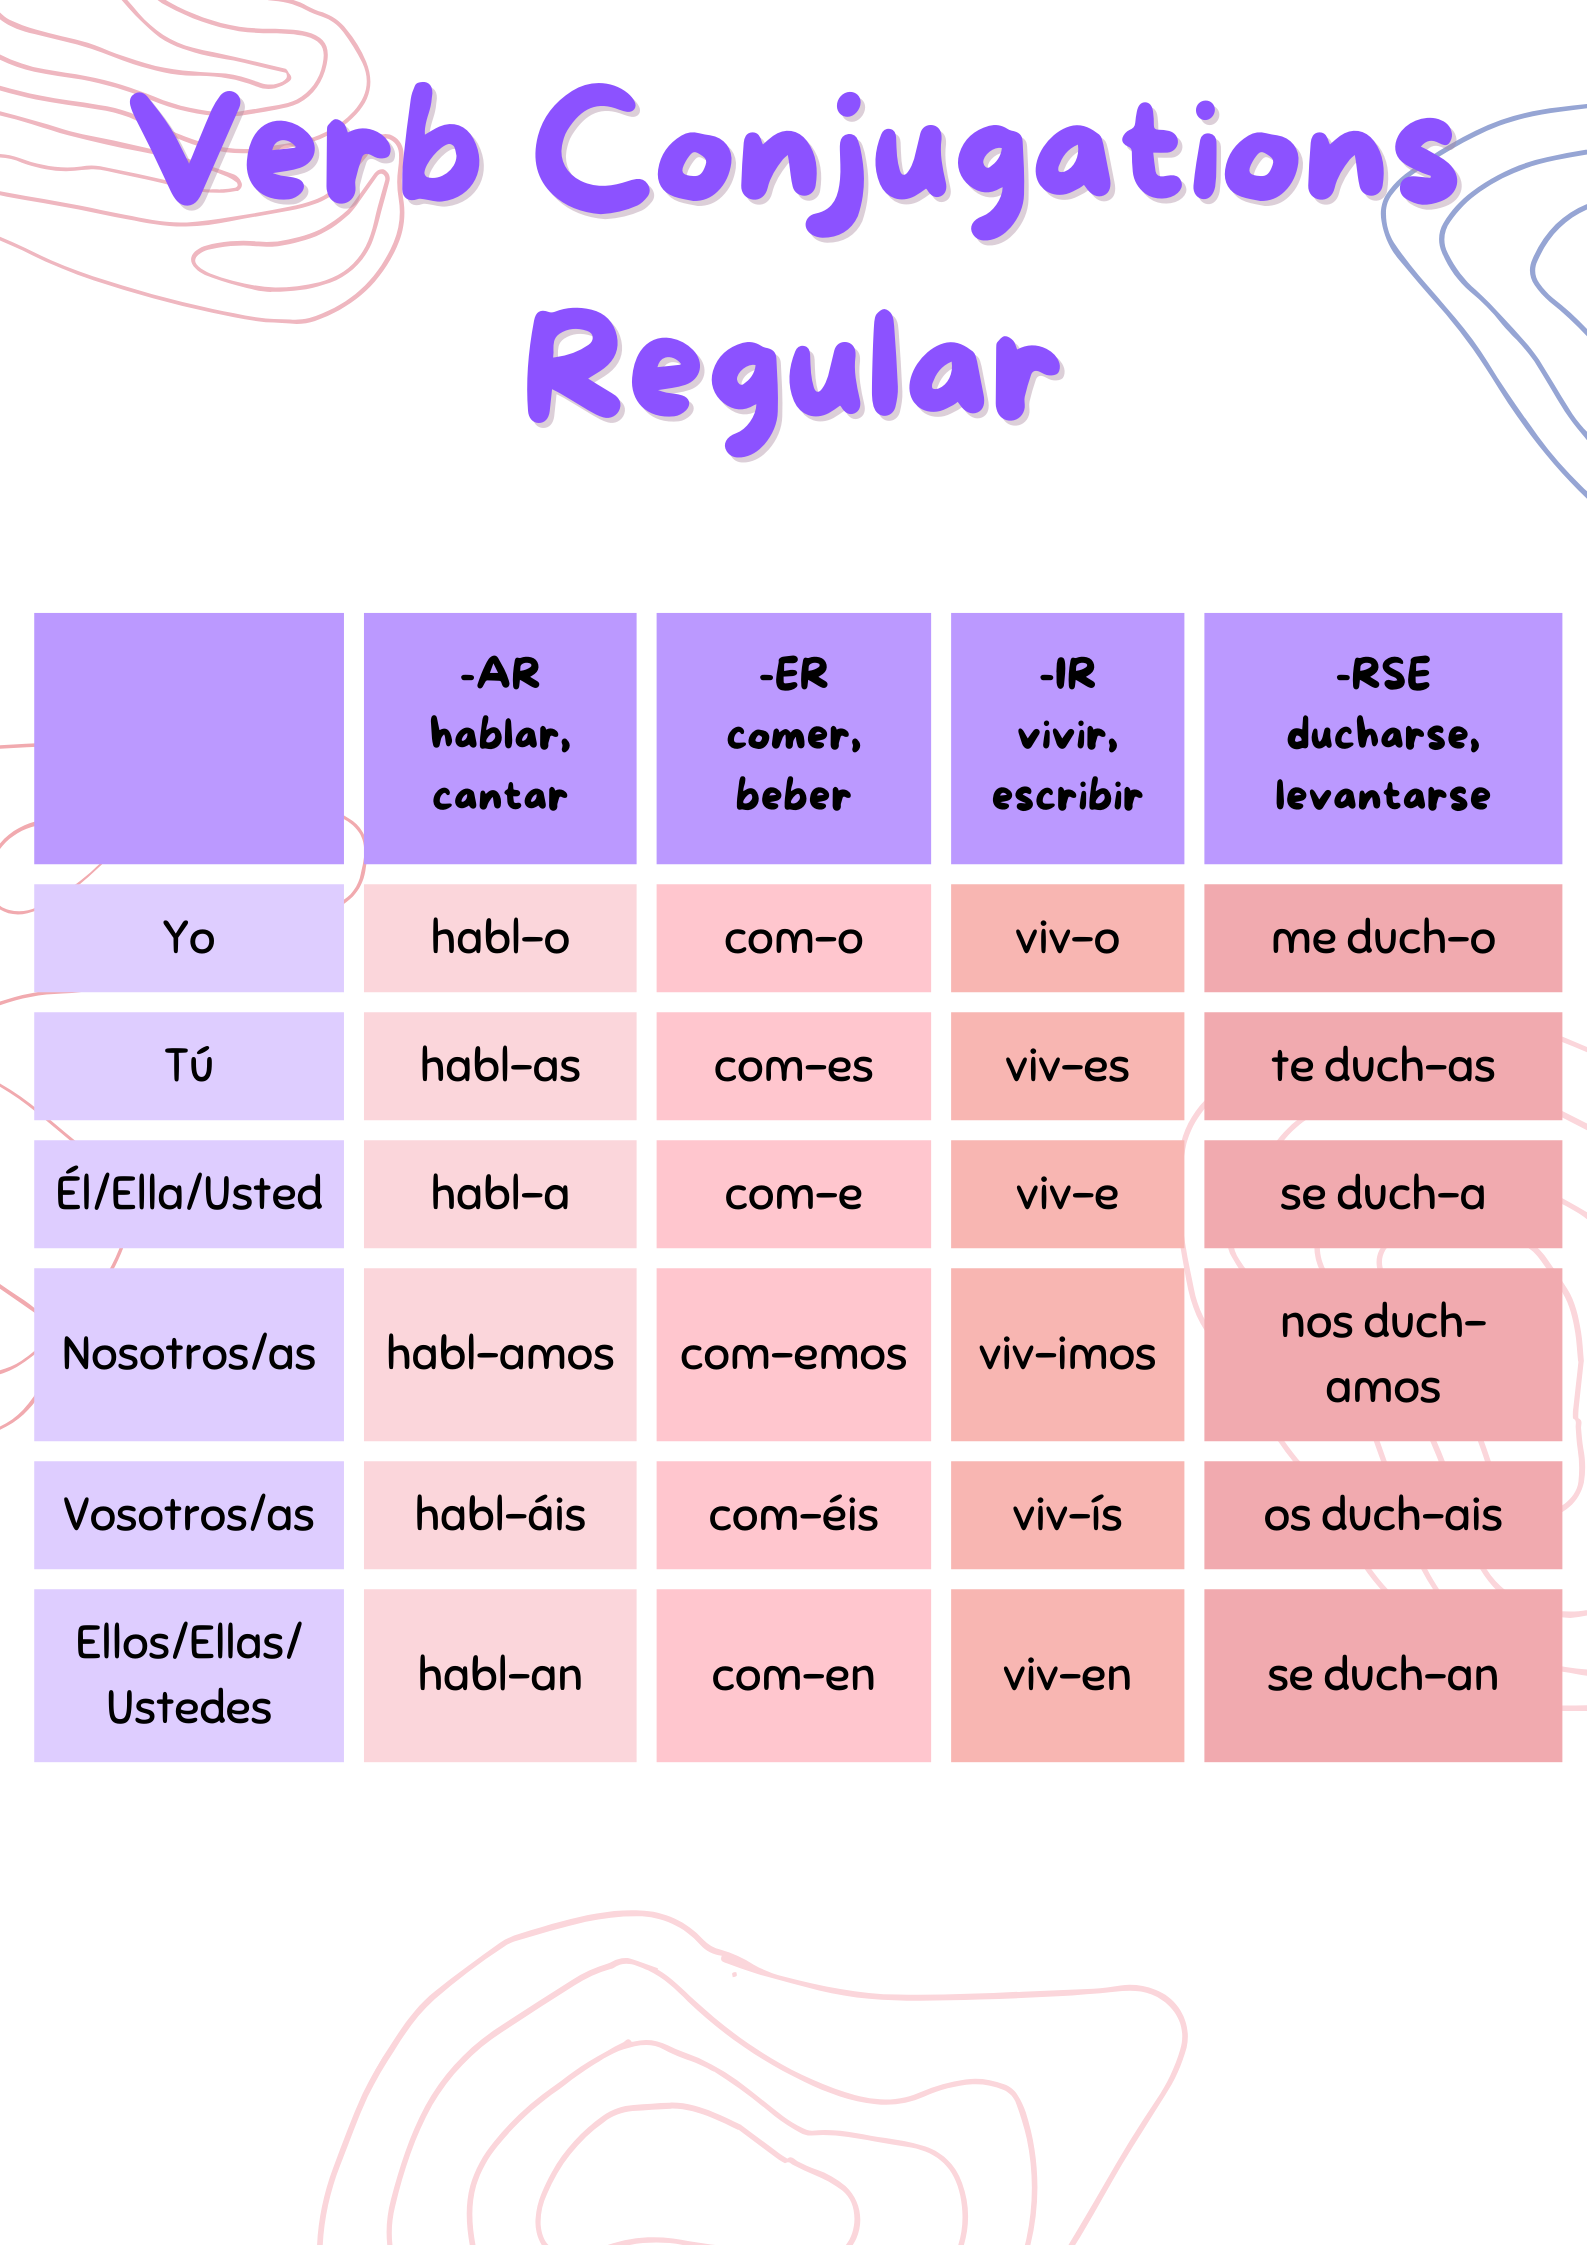 Regular Verbs Conjugations